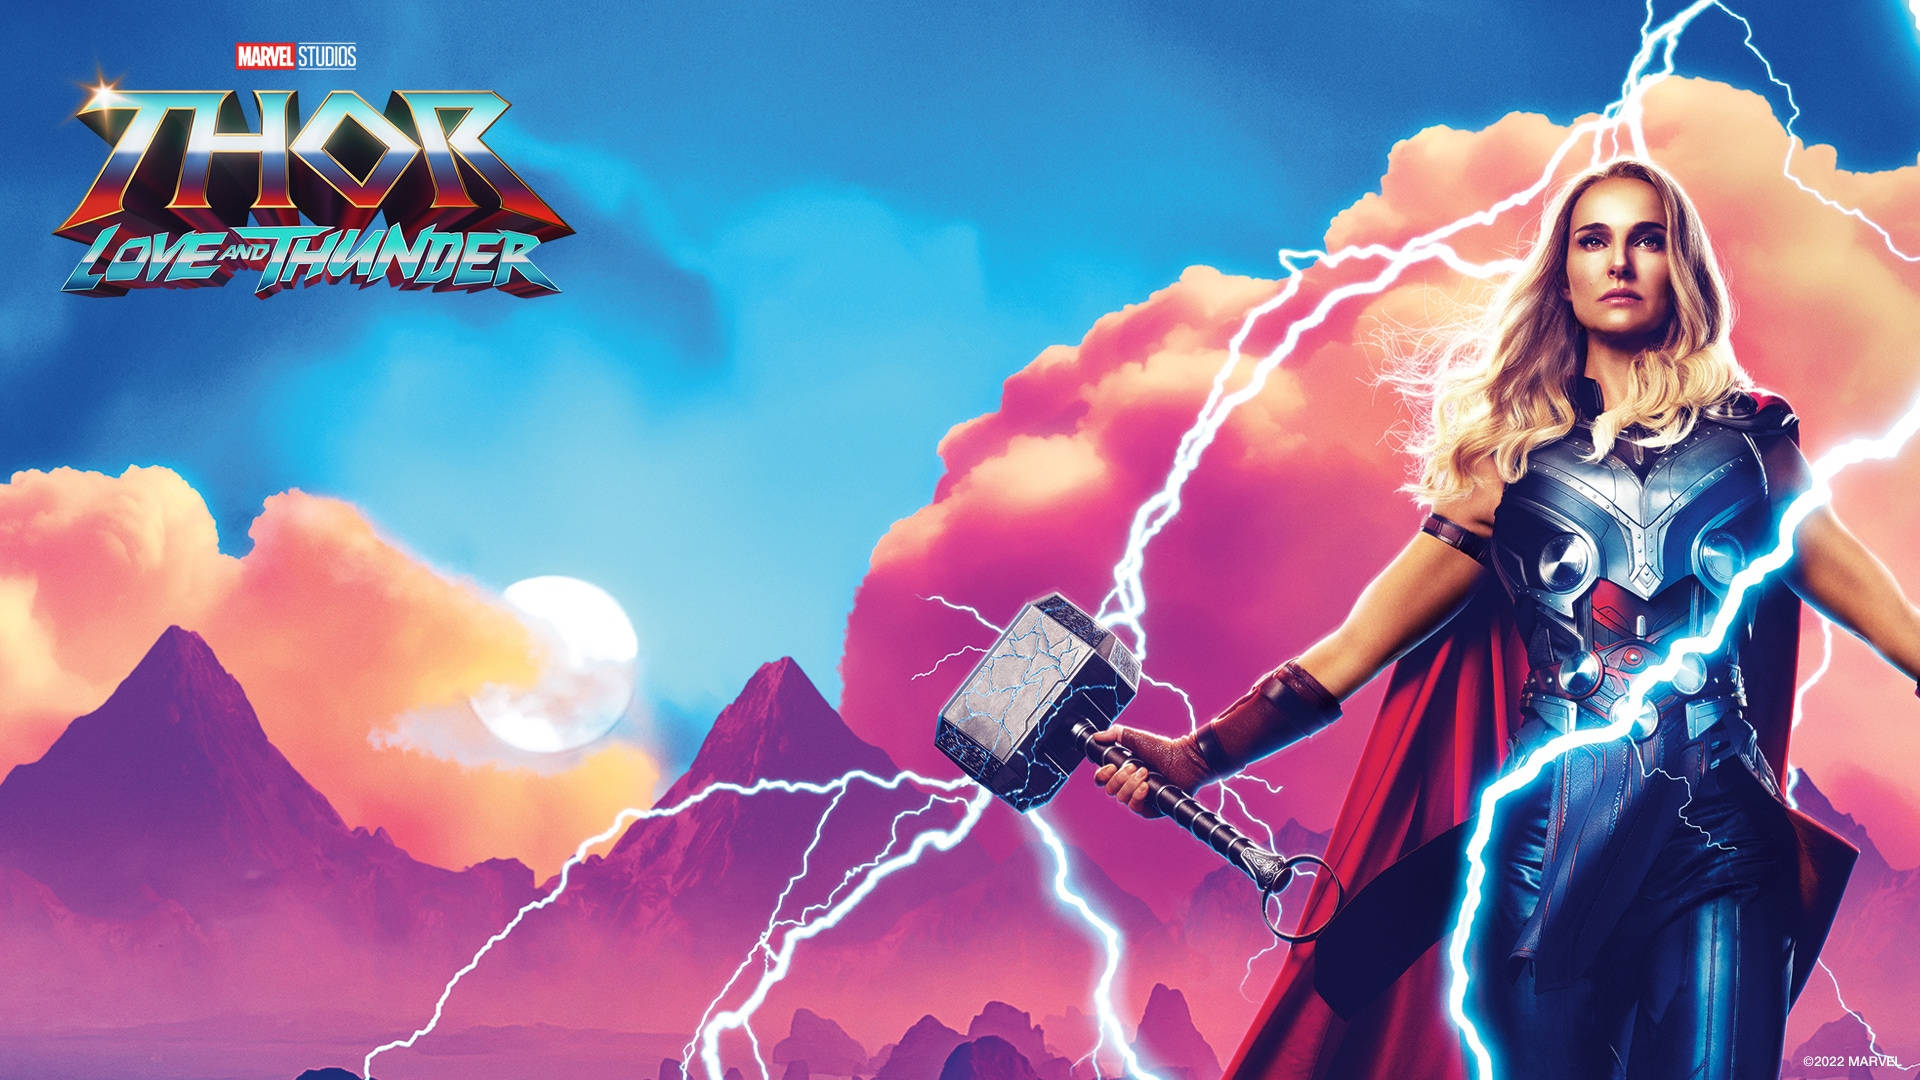 Thor Superhero Love And Thunder Movie Wallpaper